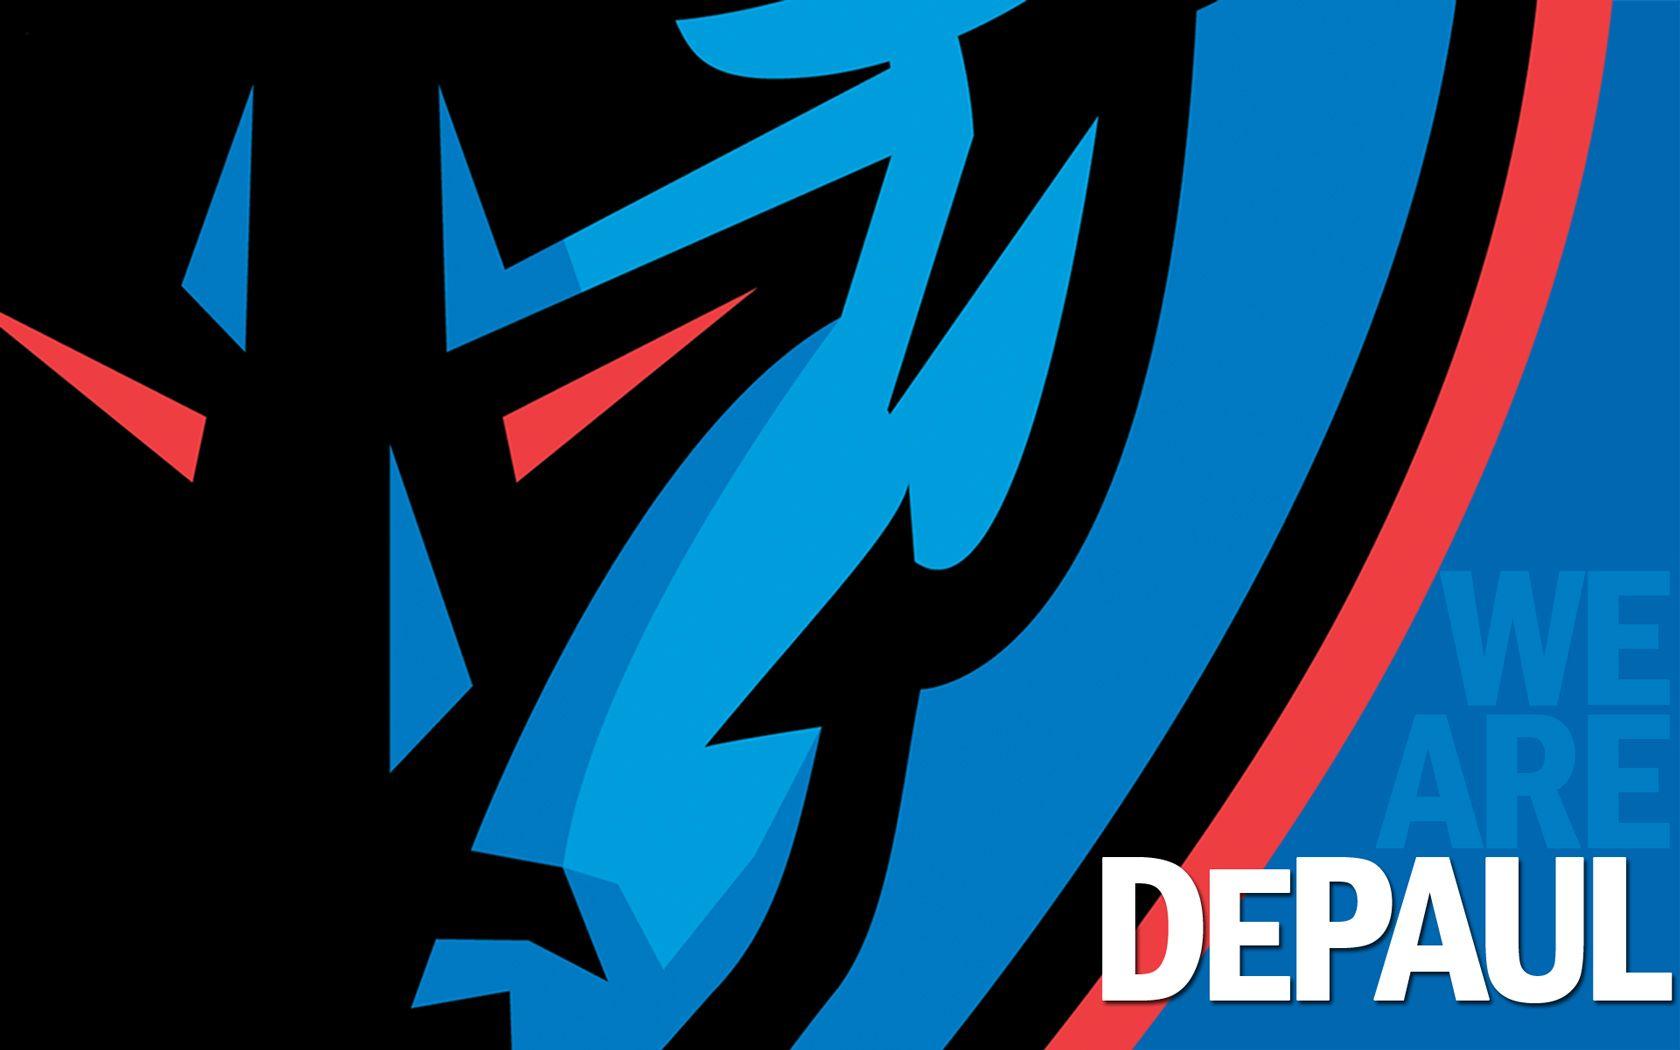 Depual Logo - Wallpaper University Athletics